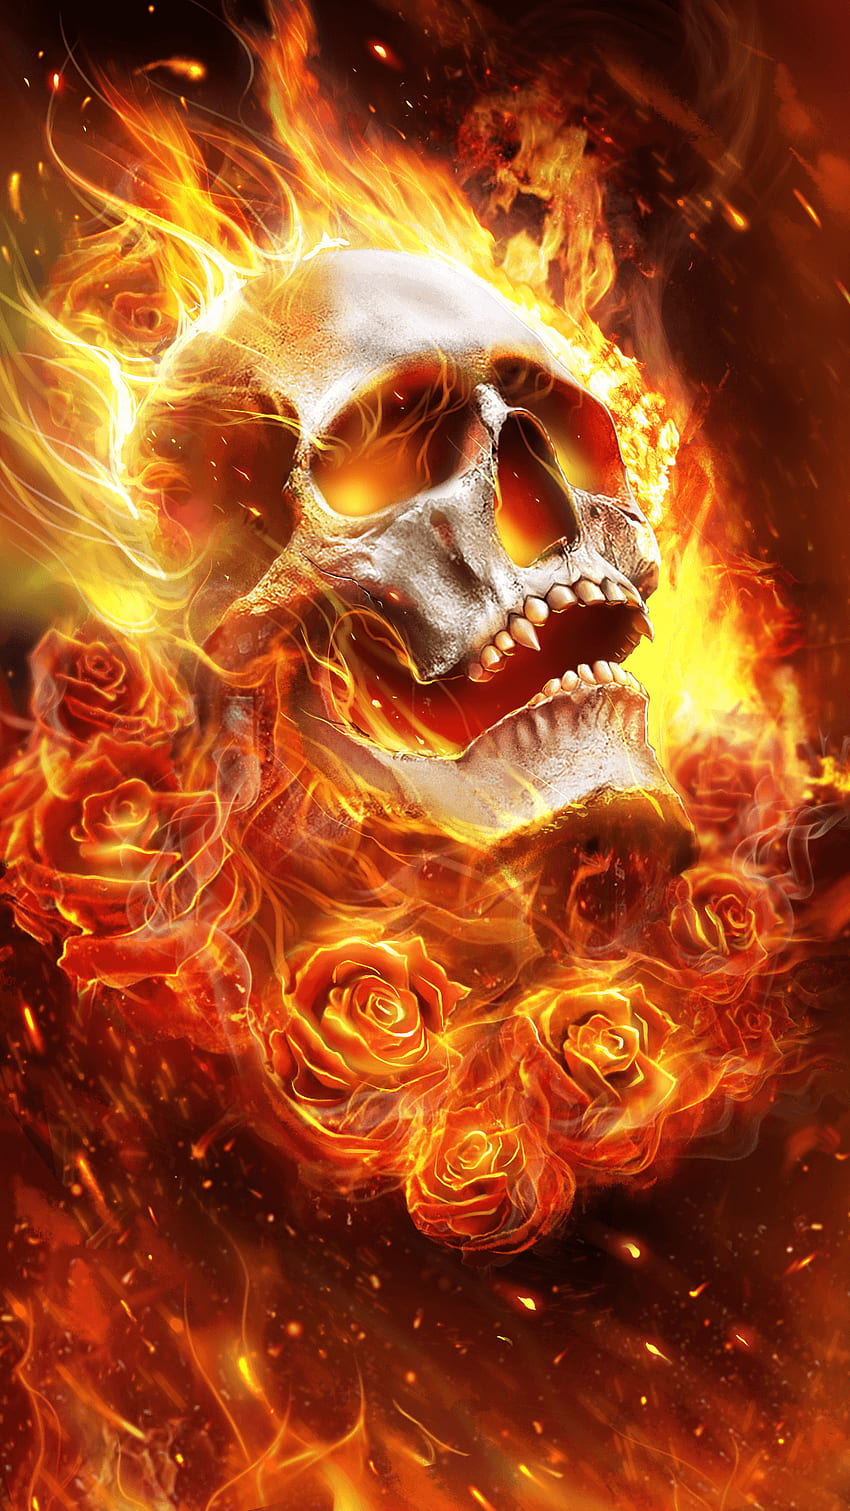 Cráneo llameante -, de cráneo llameante en murciélago, esqueleto de fuego fondo de pantalla del teléfono